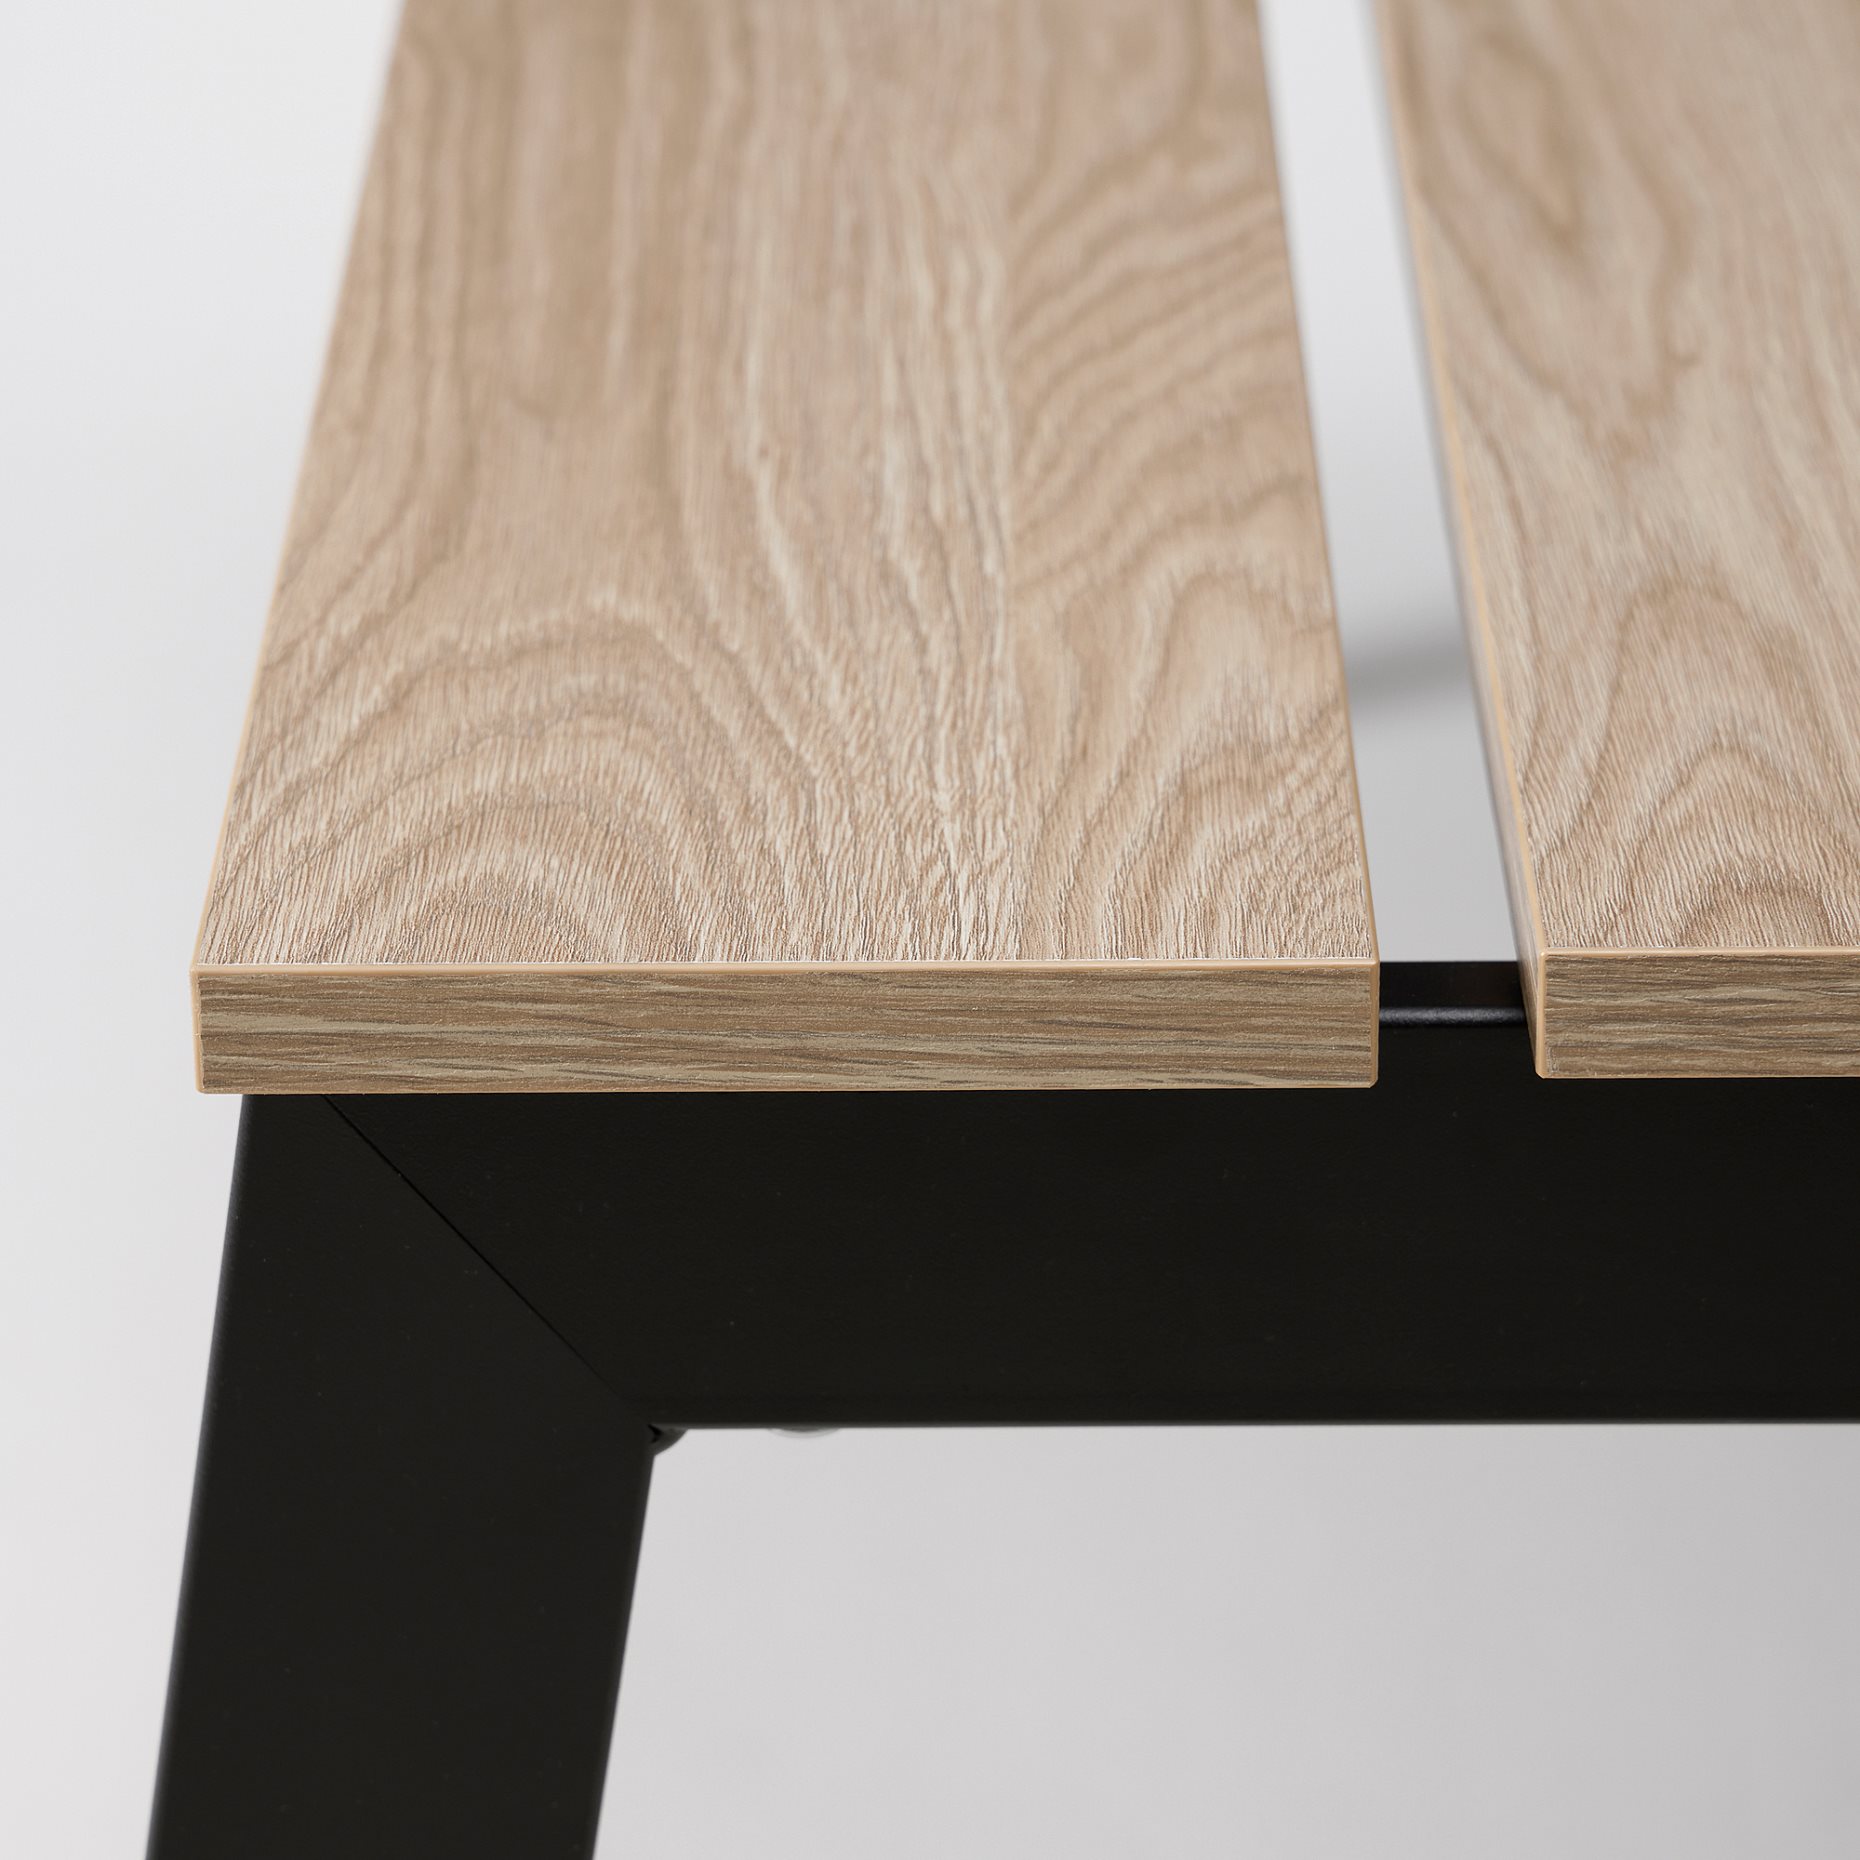 LJUNGSBRO, τραπέζι μέσης/ρυθμιζόμενο, 104x70 cm, 205.610.33